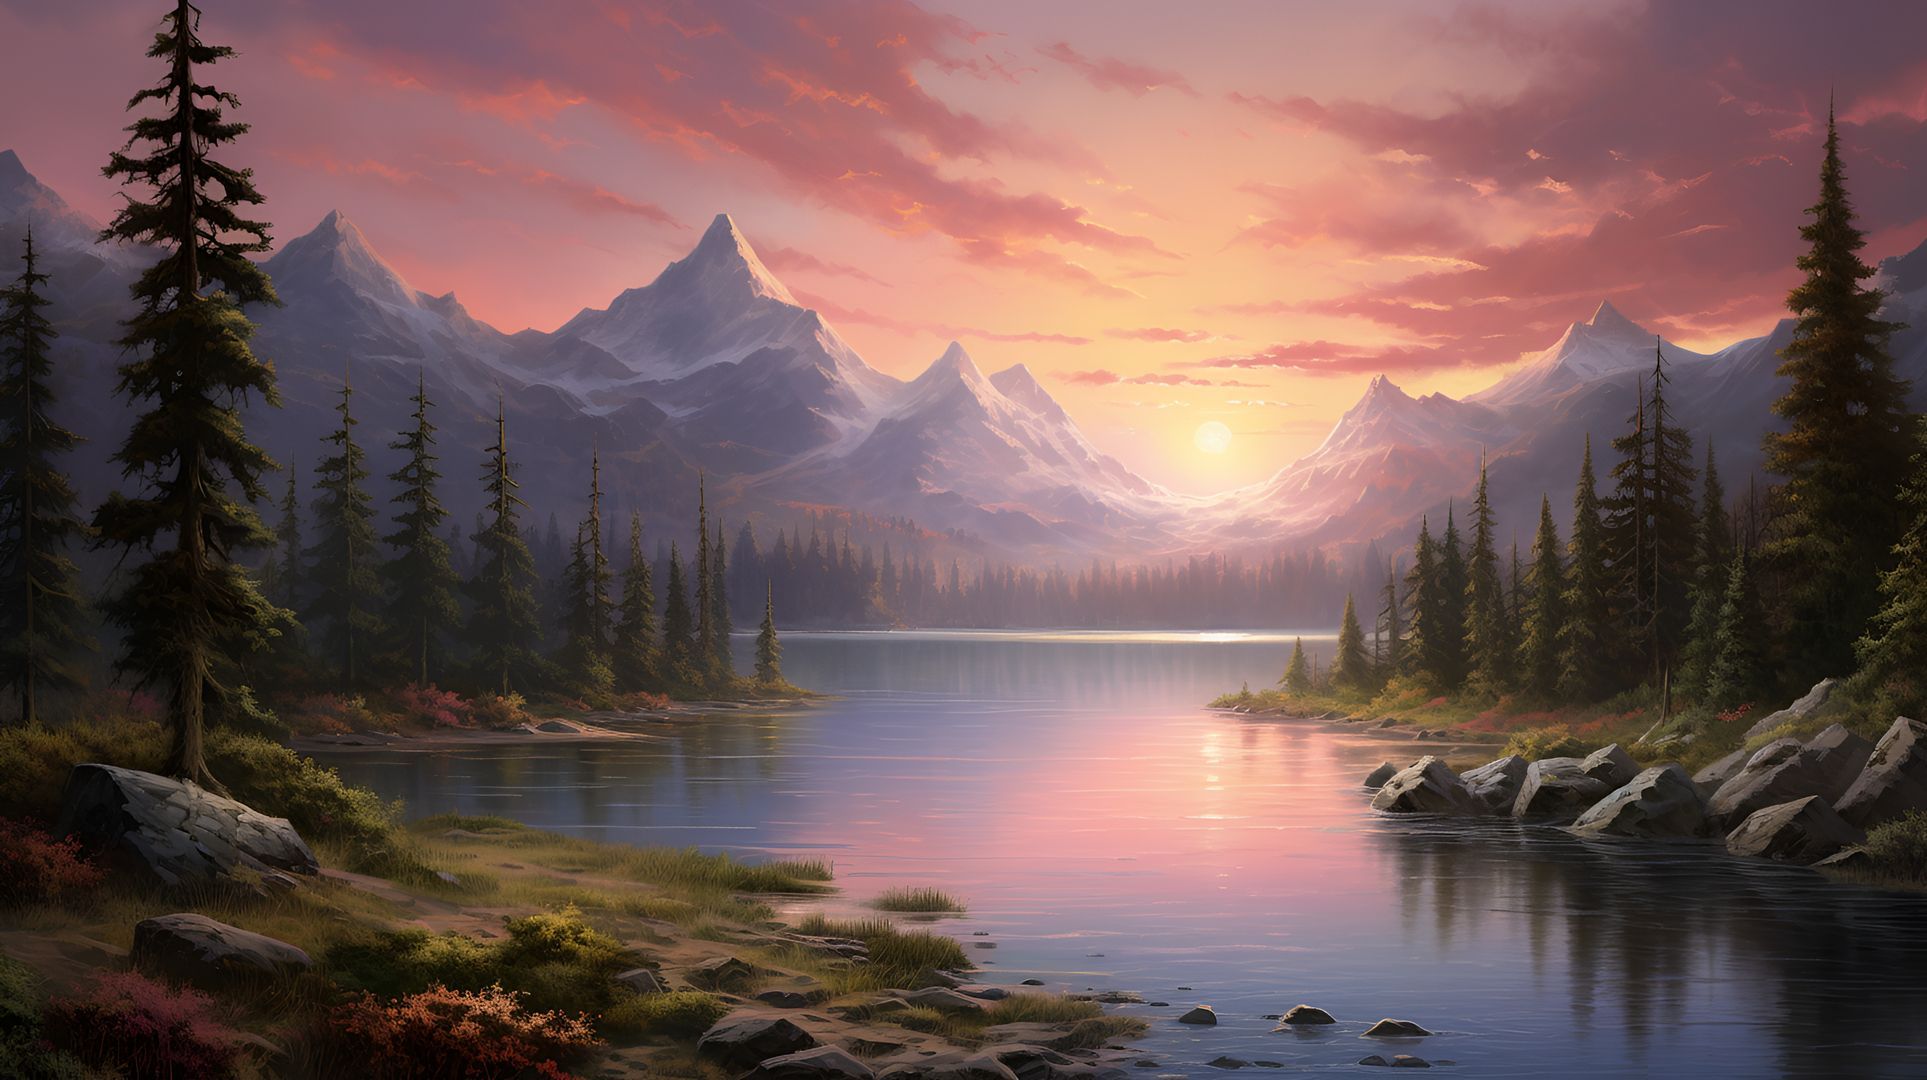 The Mountain Lake HD Digital Aesthetic Art Wallpaper, HD Artist 4K Wallpaper, Image and Background - Lake, mountain